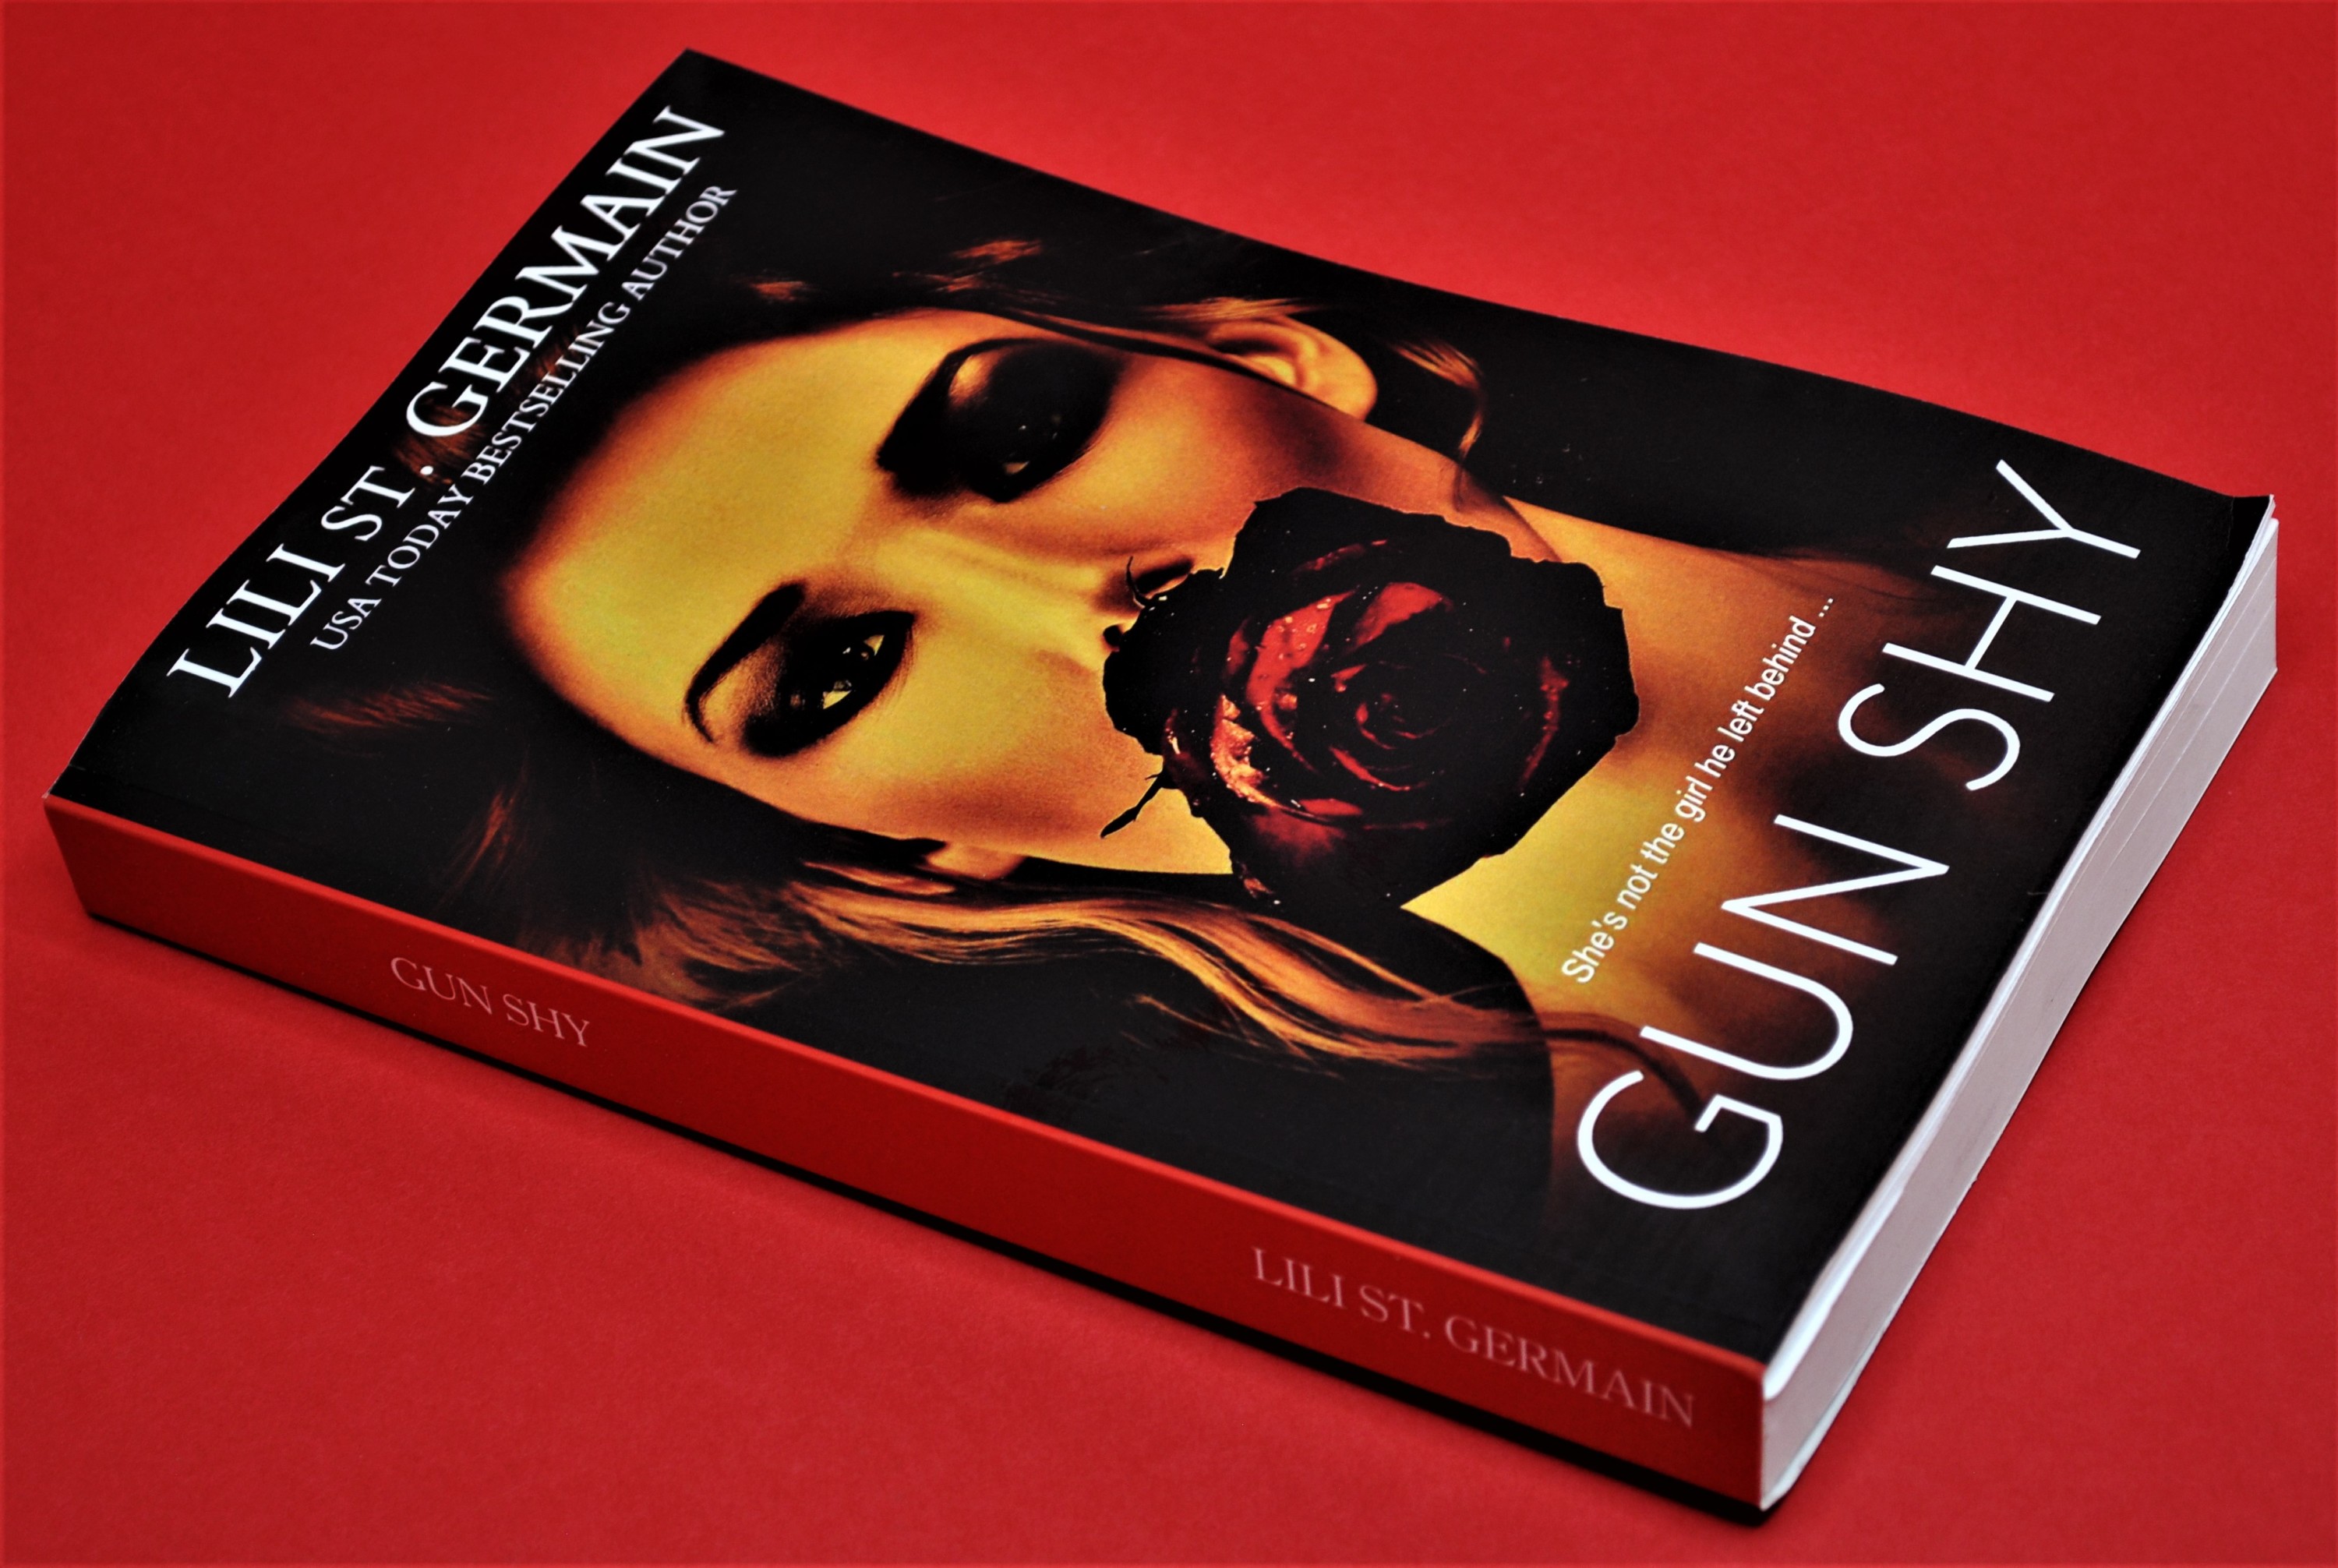 Gun Shy, Dark Romance, Lili St. Germain, Book Review